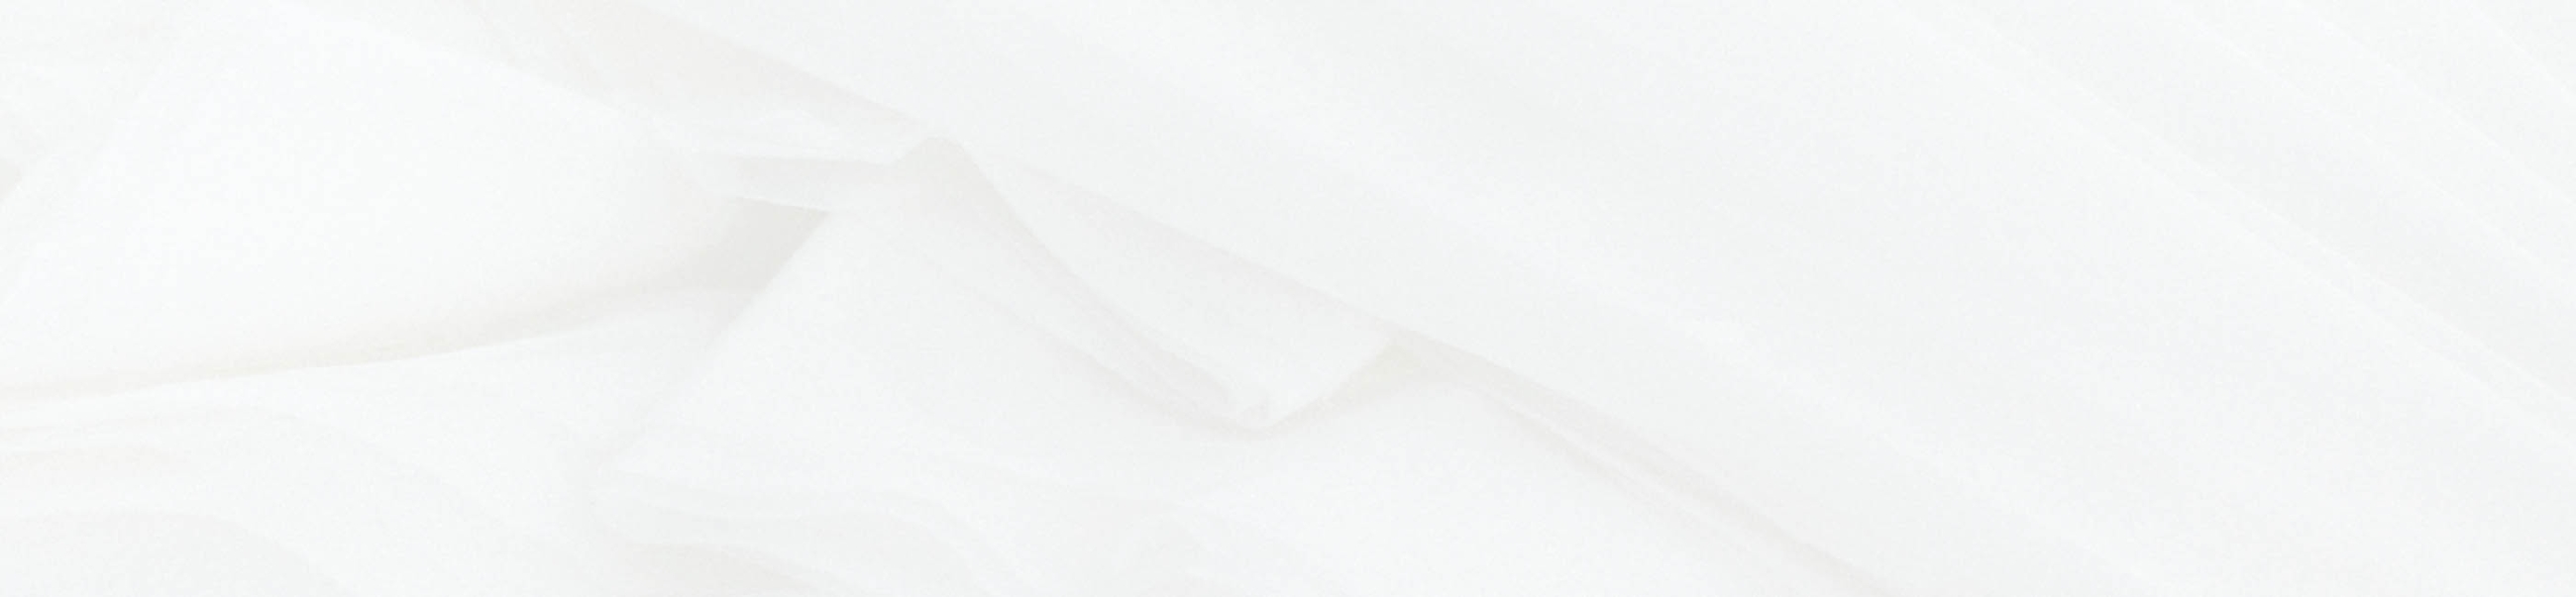 Custom Gowns Background - Desktop Image